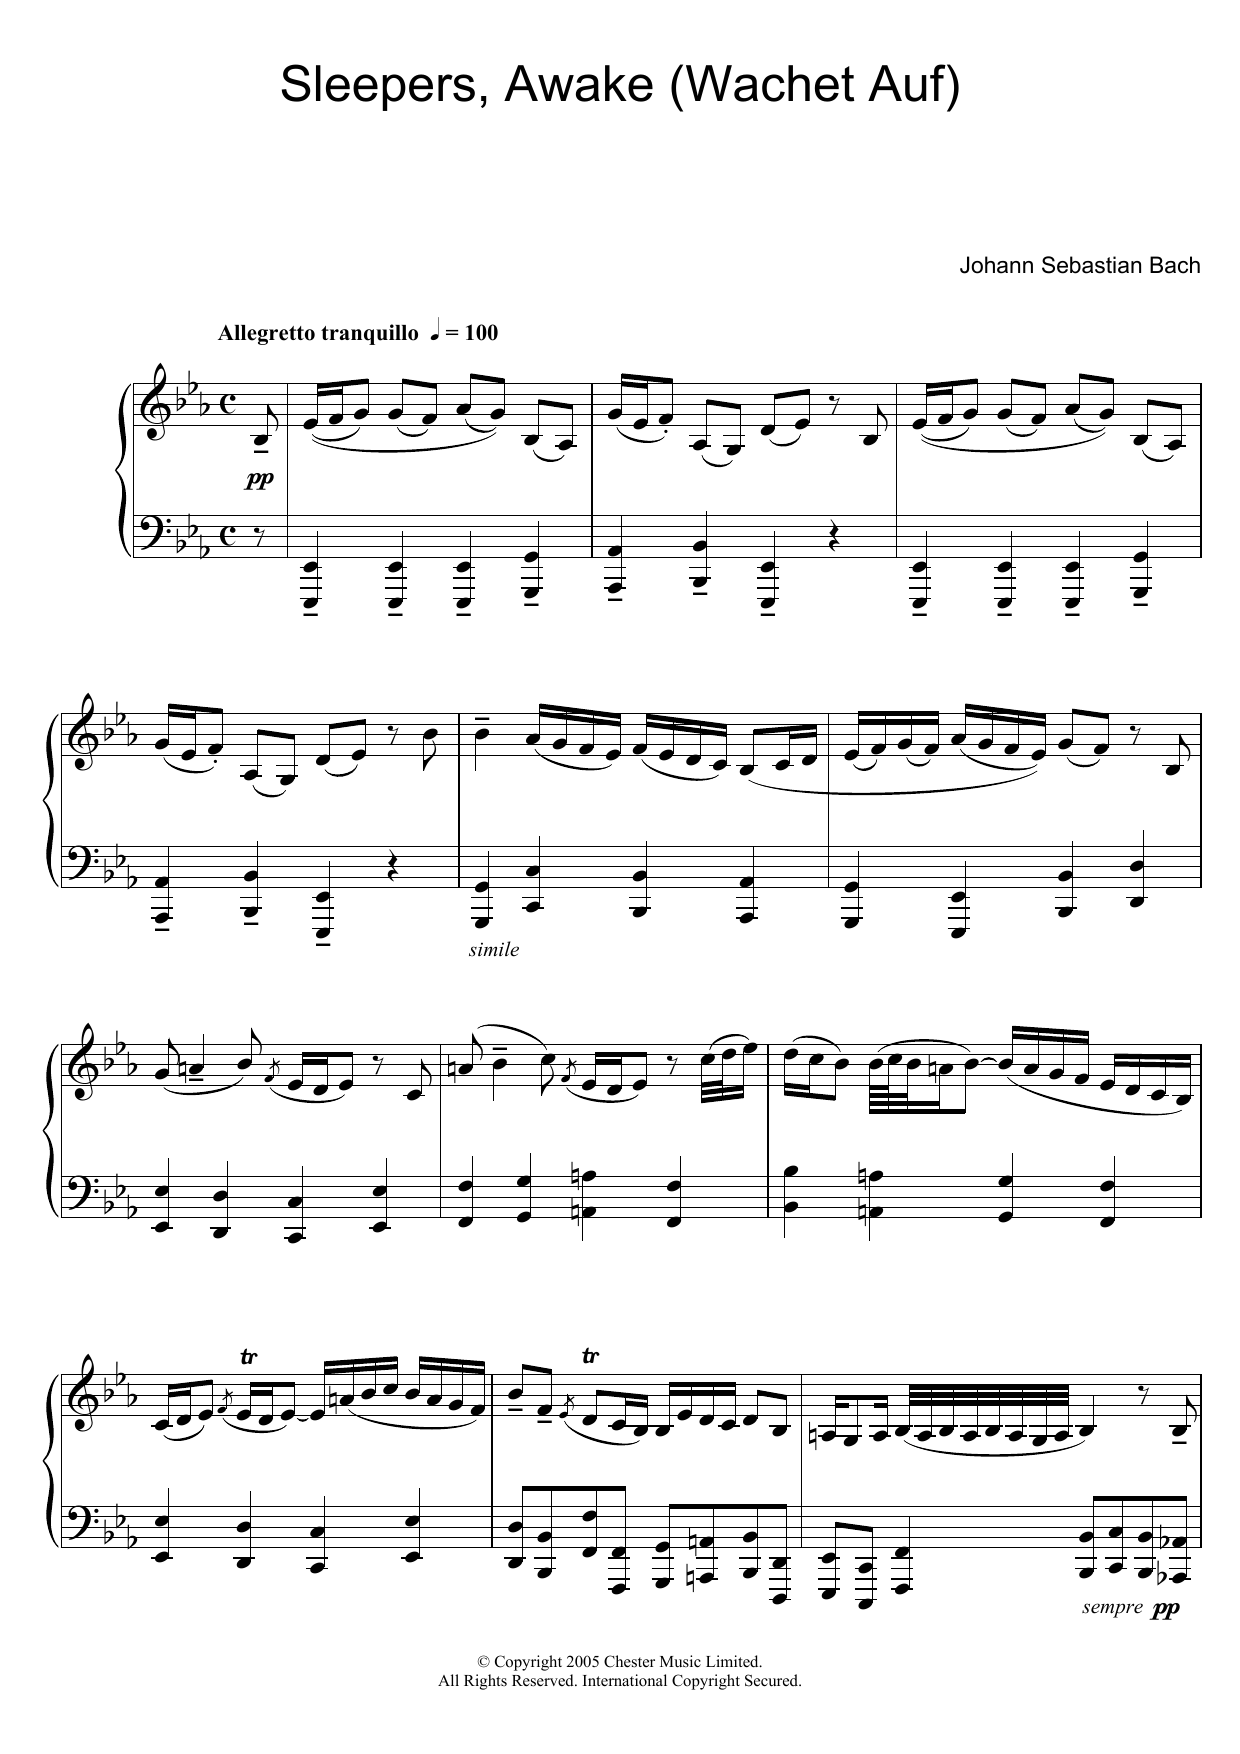 Johann Sebastian Bach Sleepers, Awake (Wachet Auf) Sheet Music Notes & Chords for Trombone - Download or Print PDF